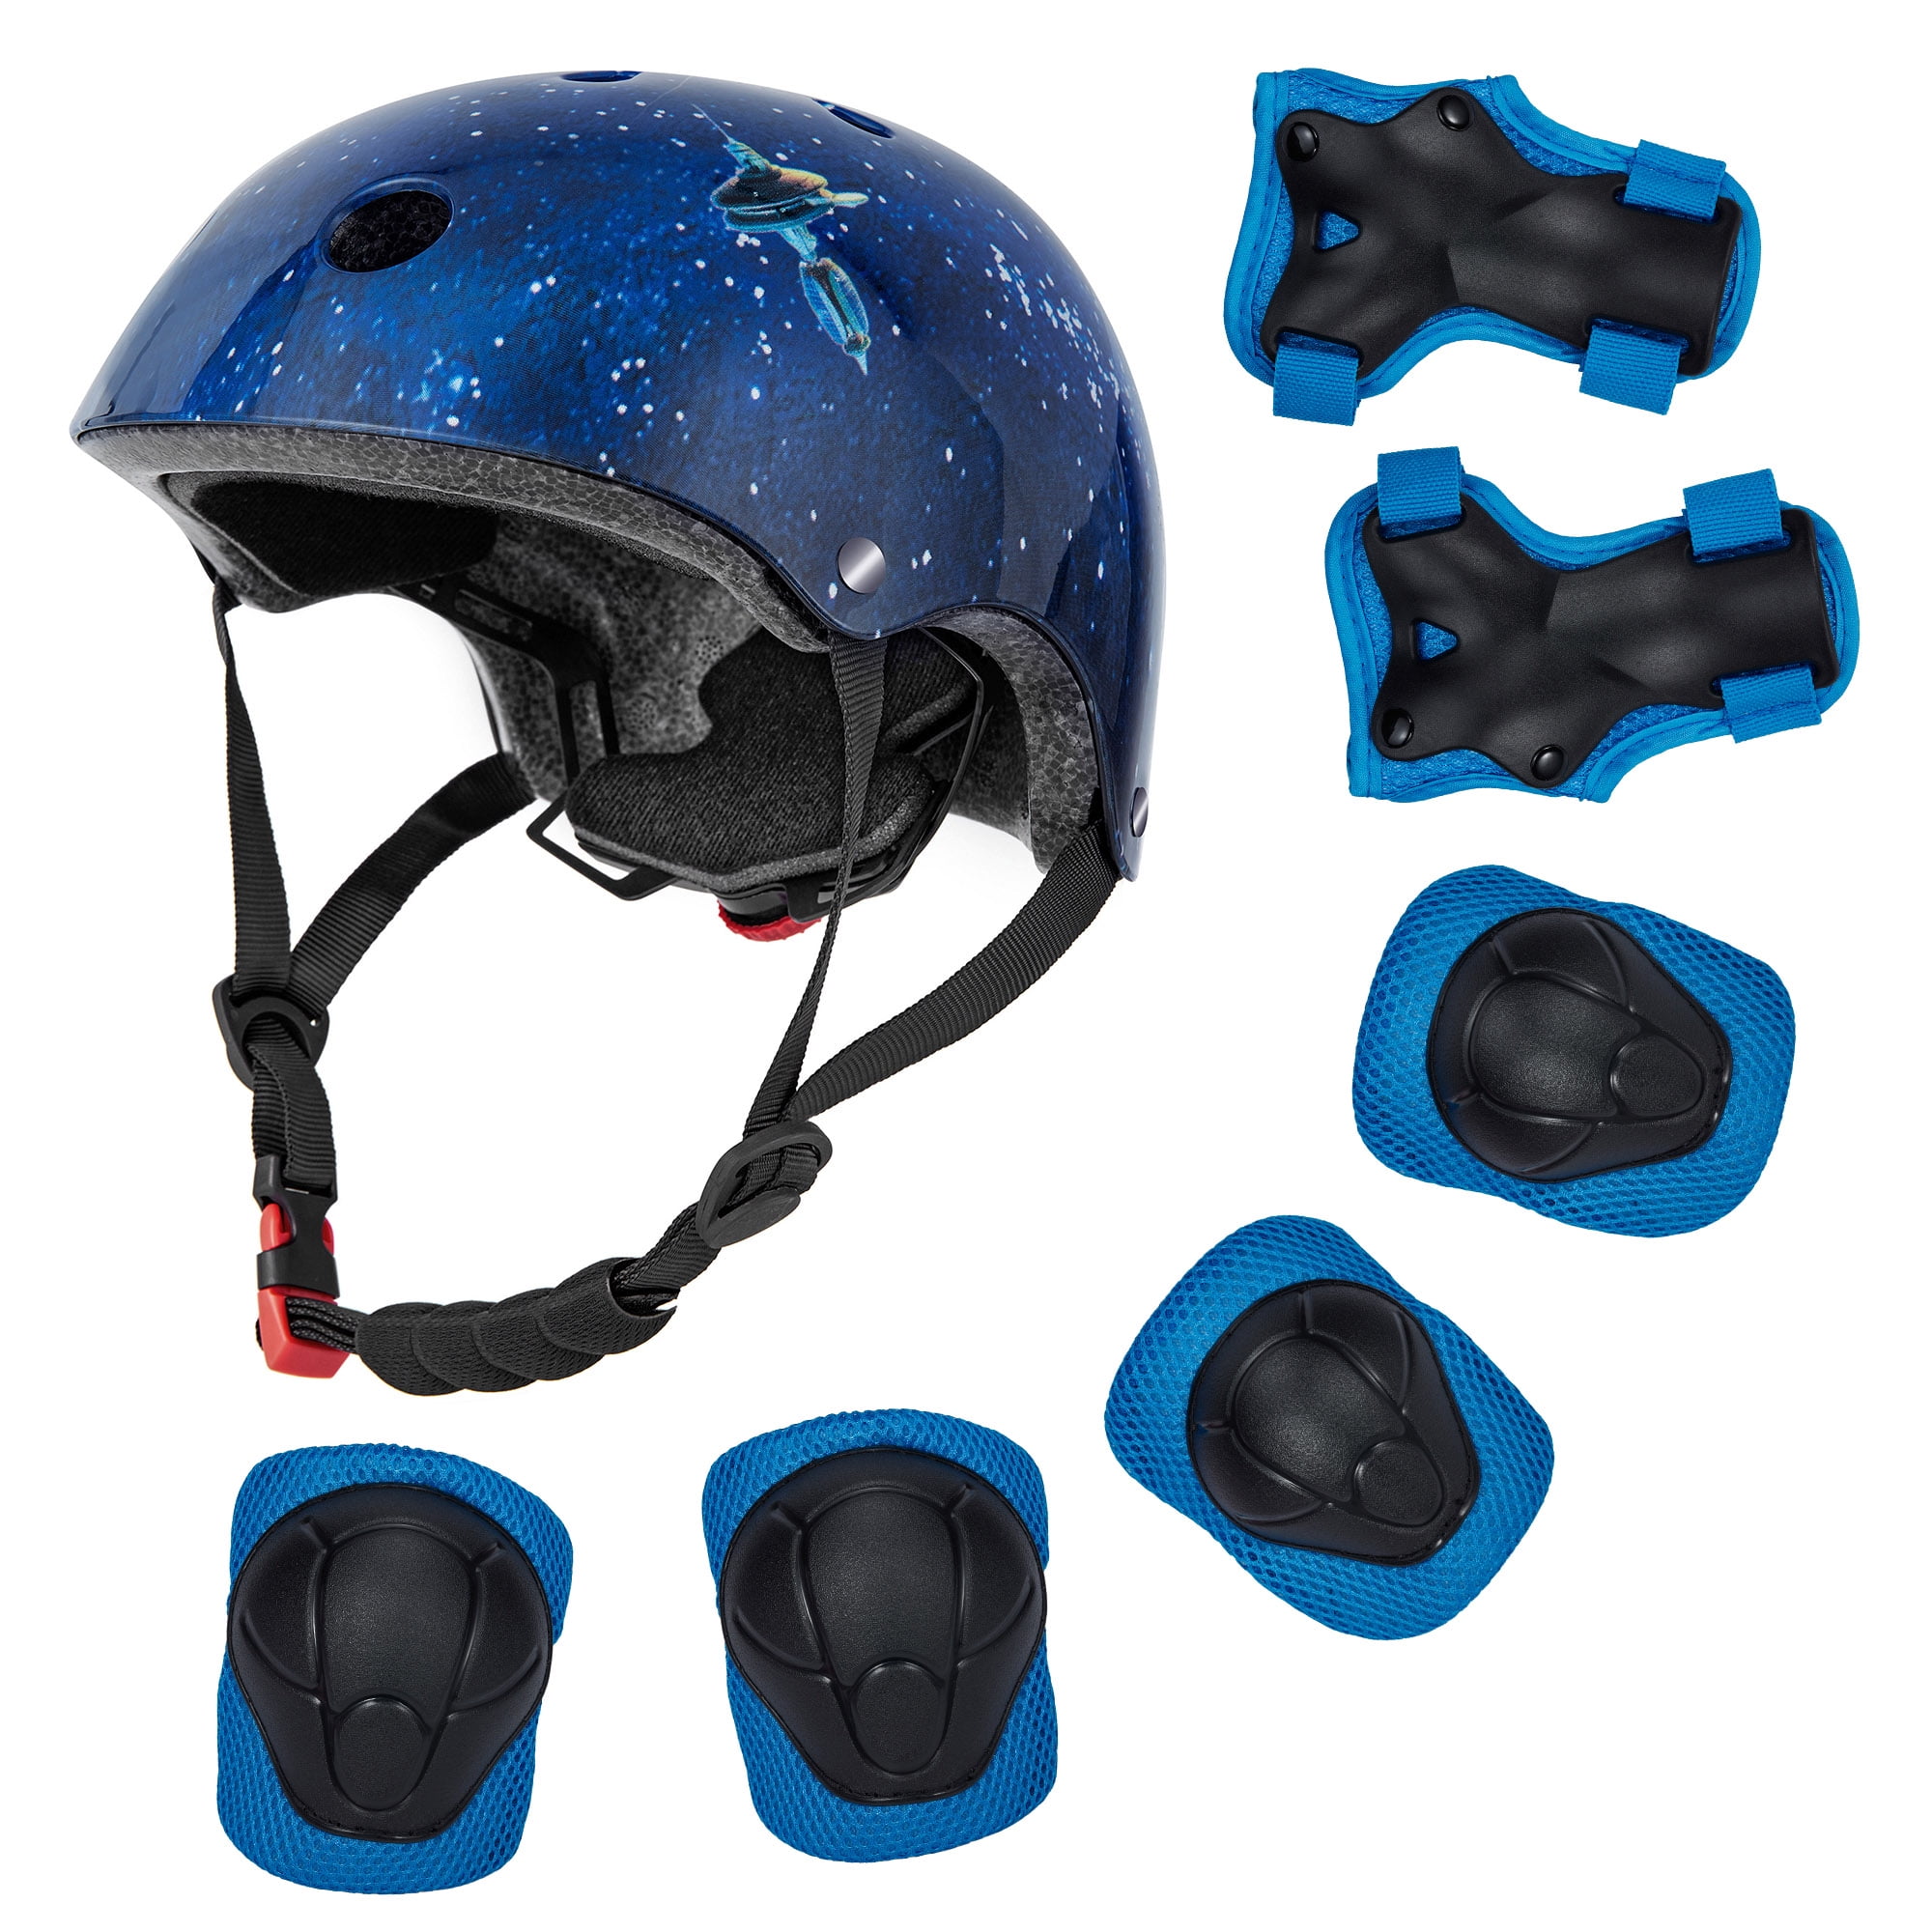 Kiddimoto Kids Fully Adjustable Helmet for Cycling/Scooter/Balance Bike/Skateboard Stars 